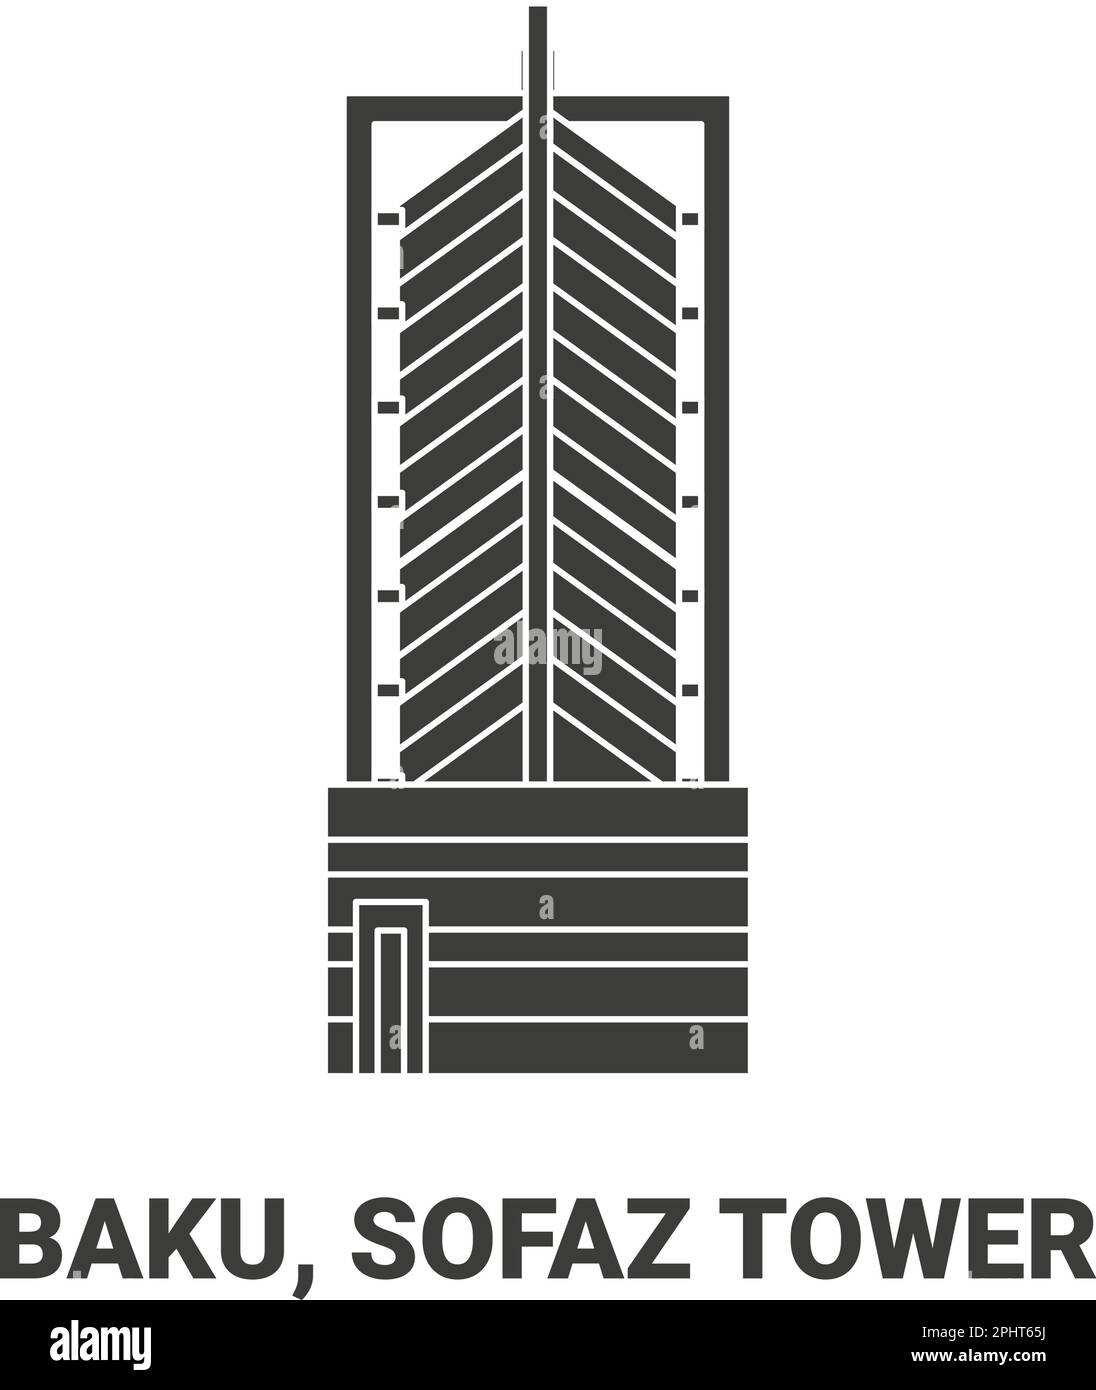 Azerbaijan, Baku, Sofaz Tower, travel landmark vector illustration Stock Vector